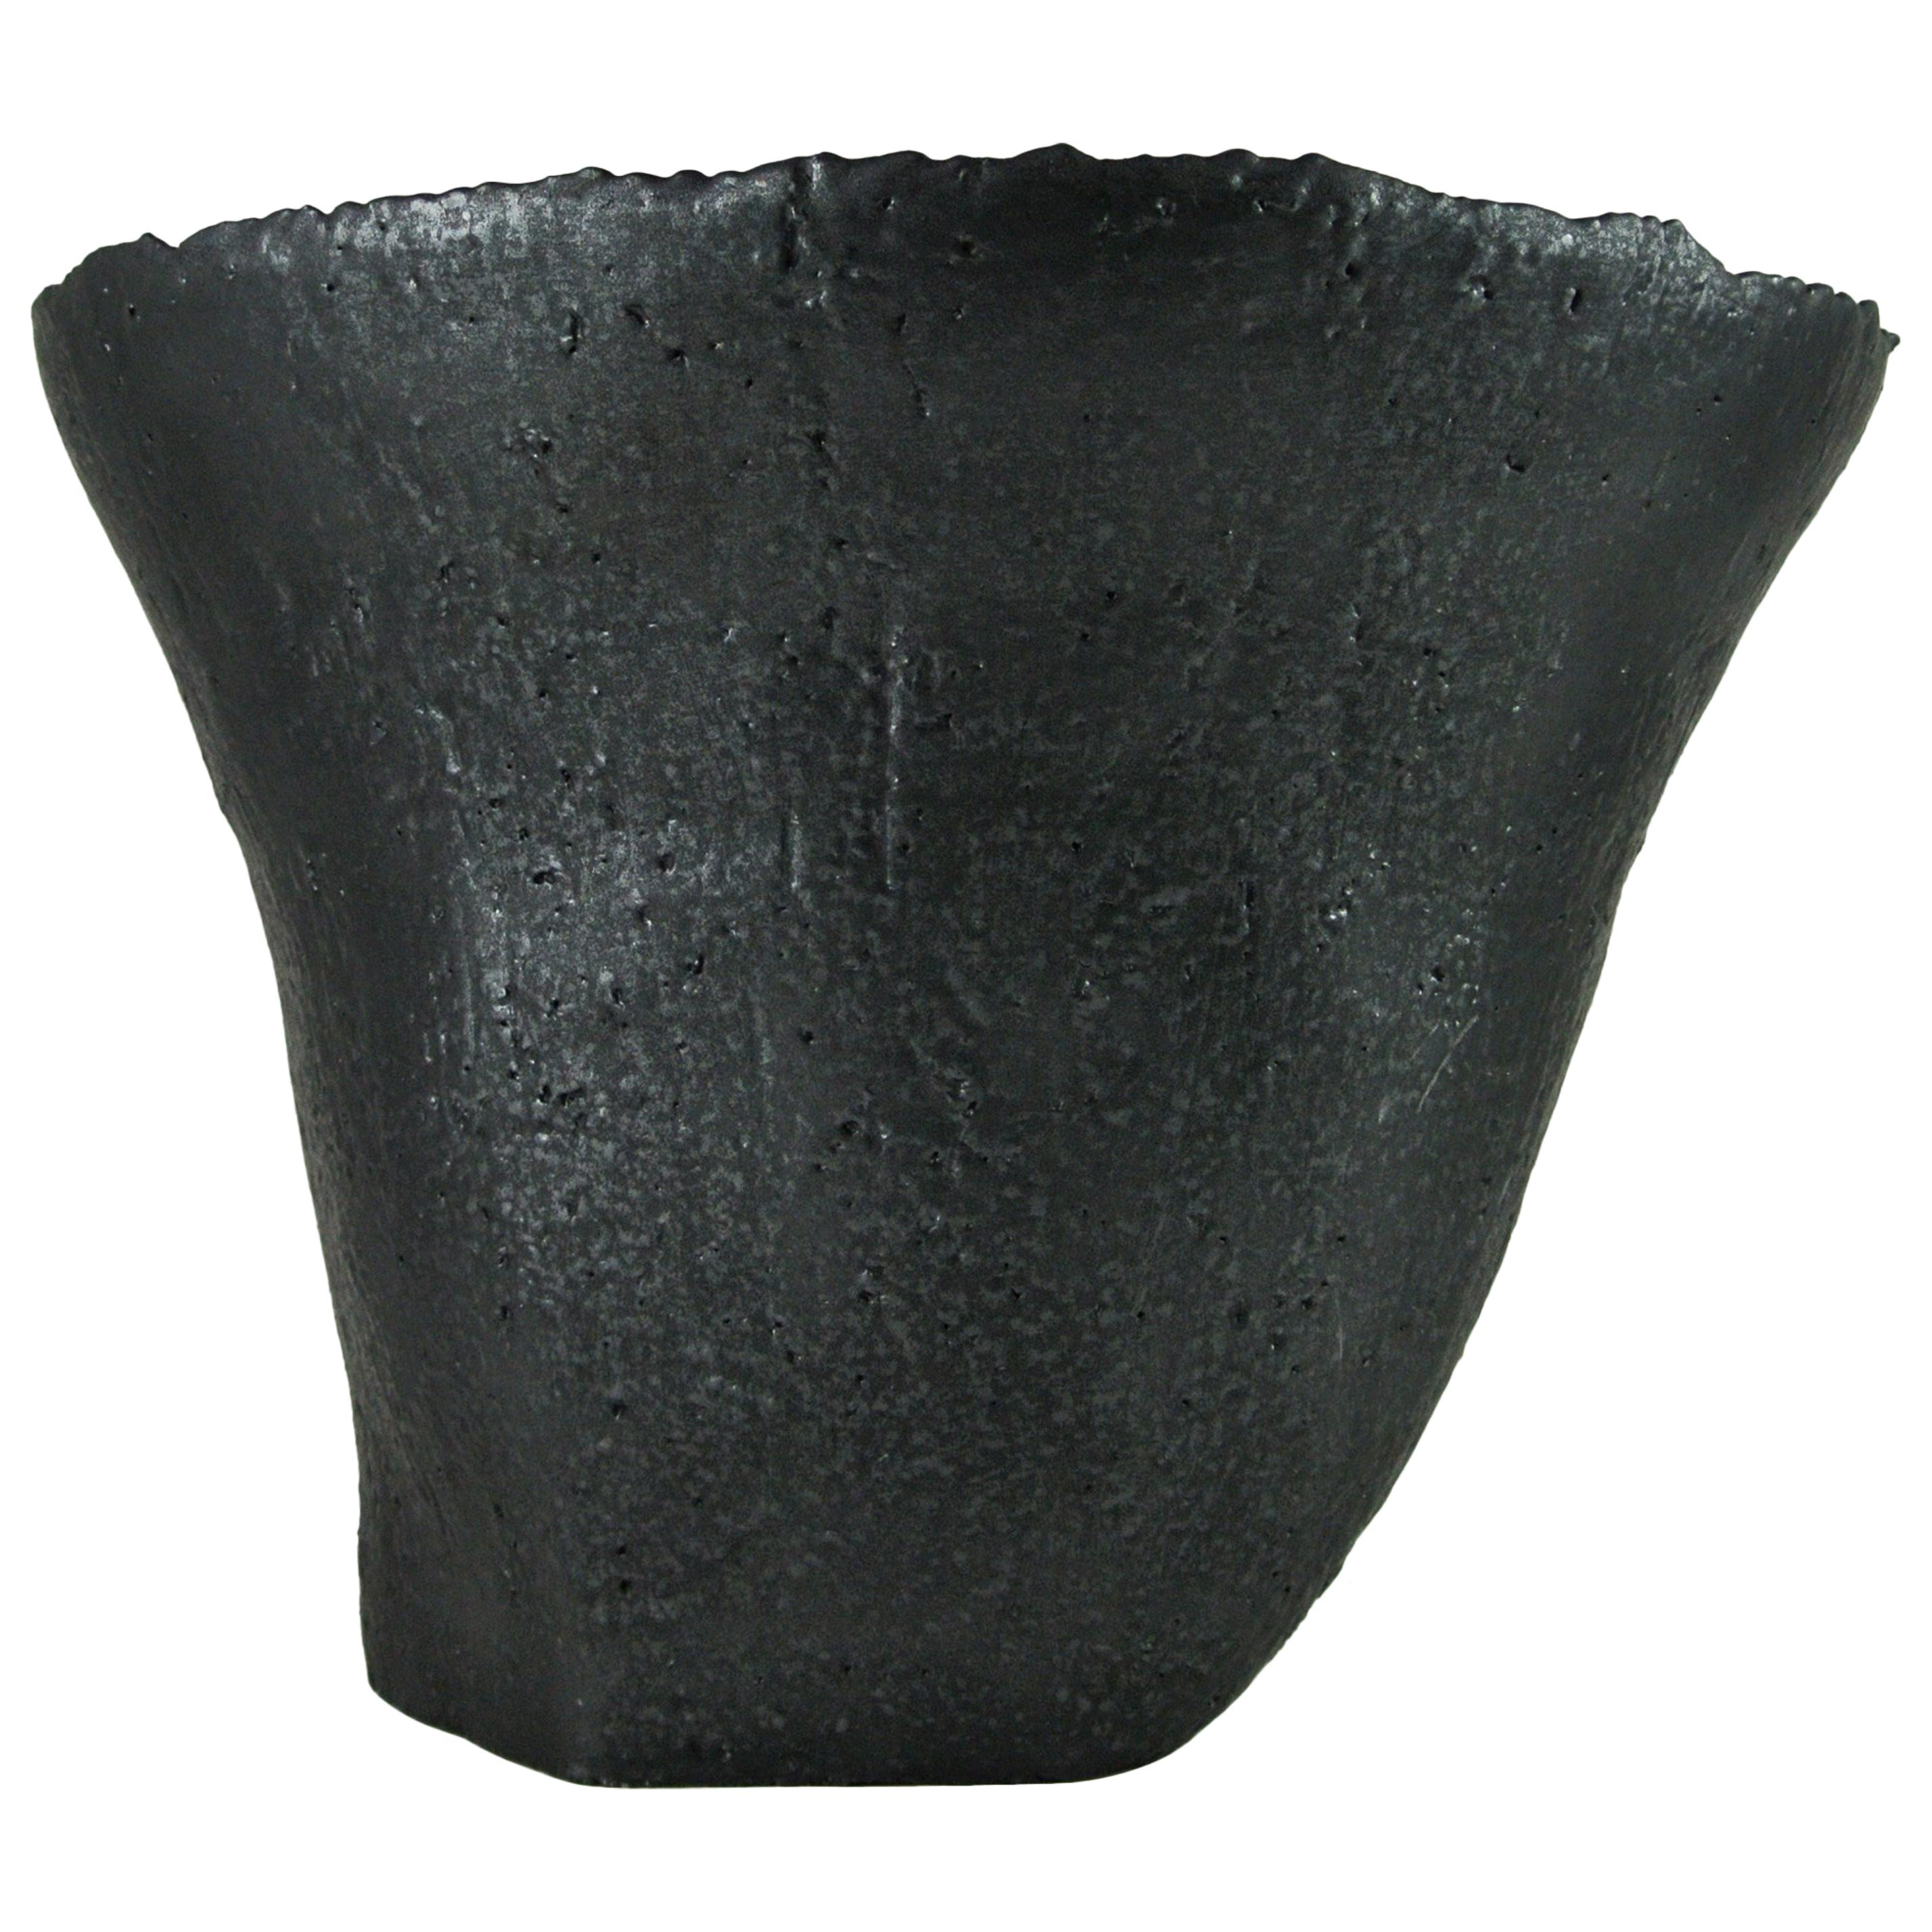 Massive Contemporary Vessel Grey Stoneware with Black Metallic Glaze